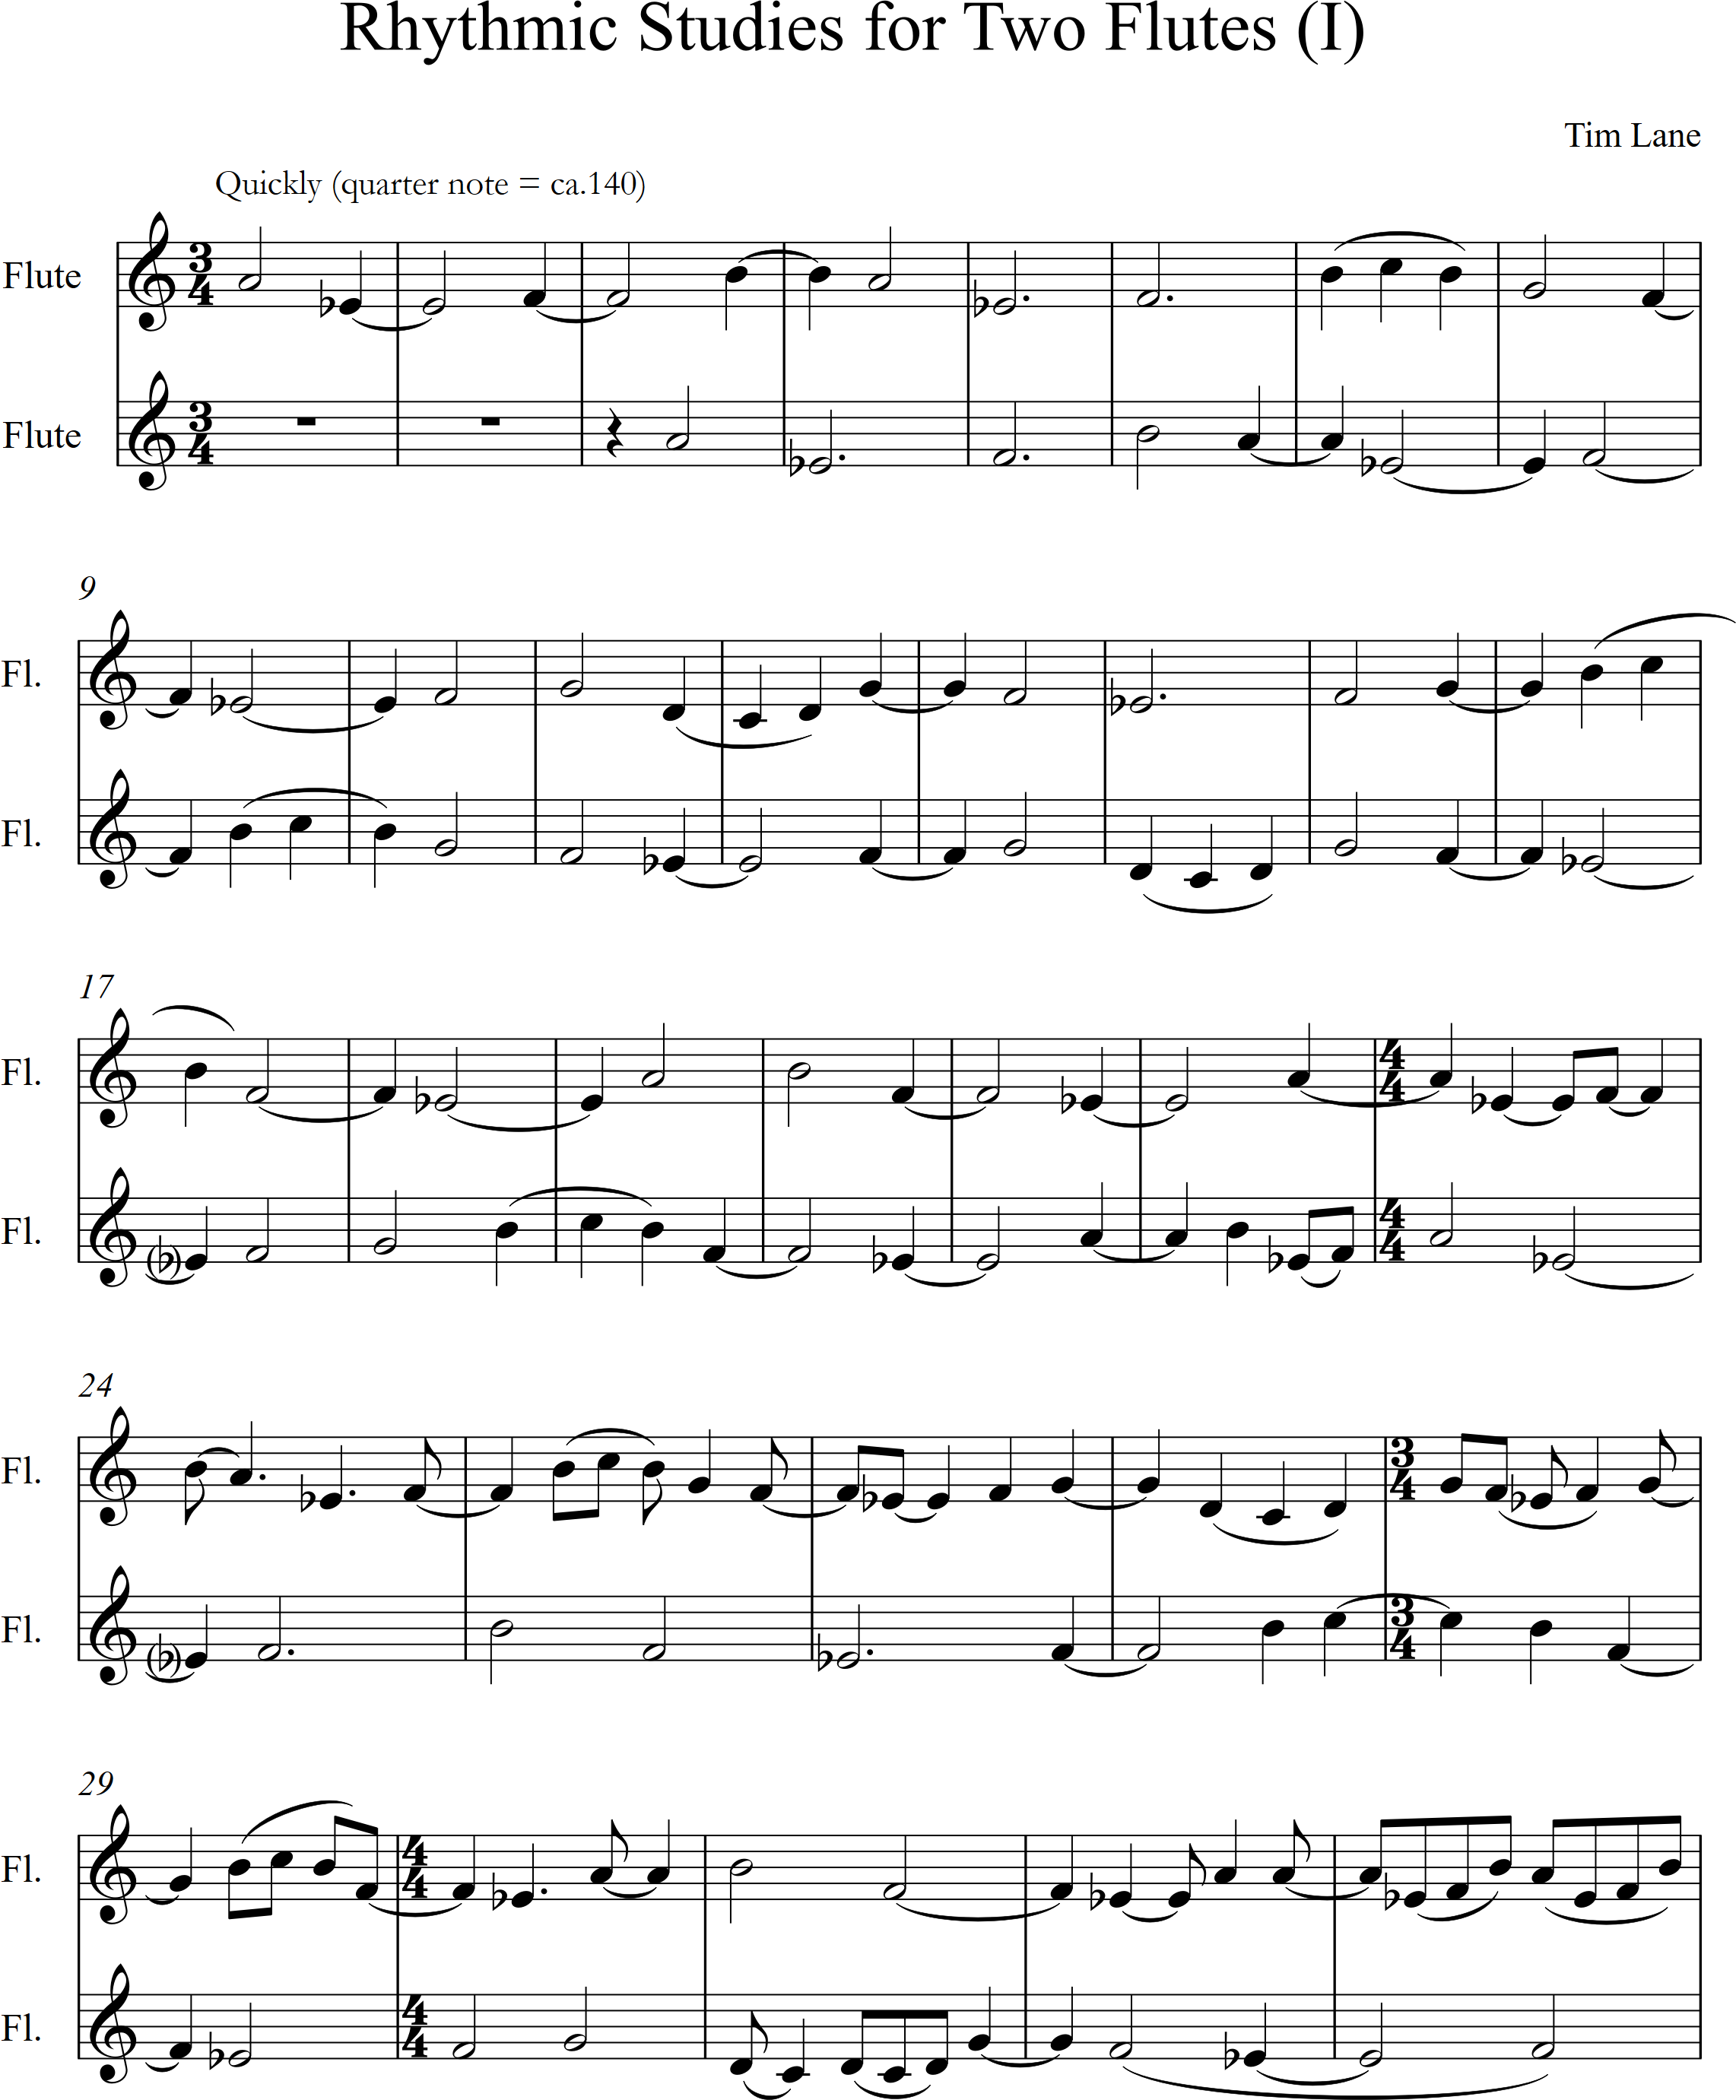 Rhythmic Studies for Two Flutes (I)_0001.png